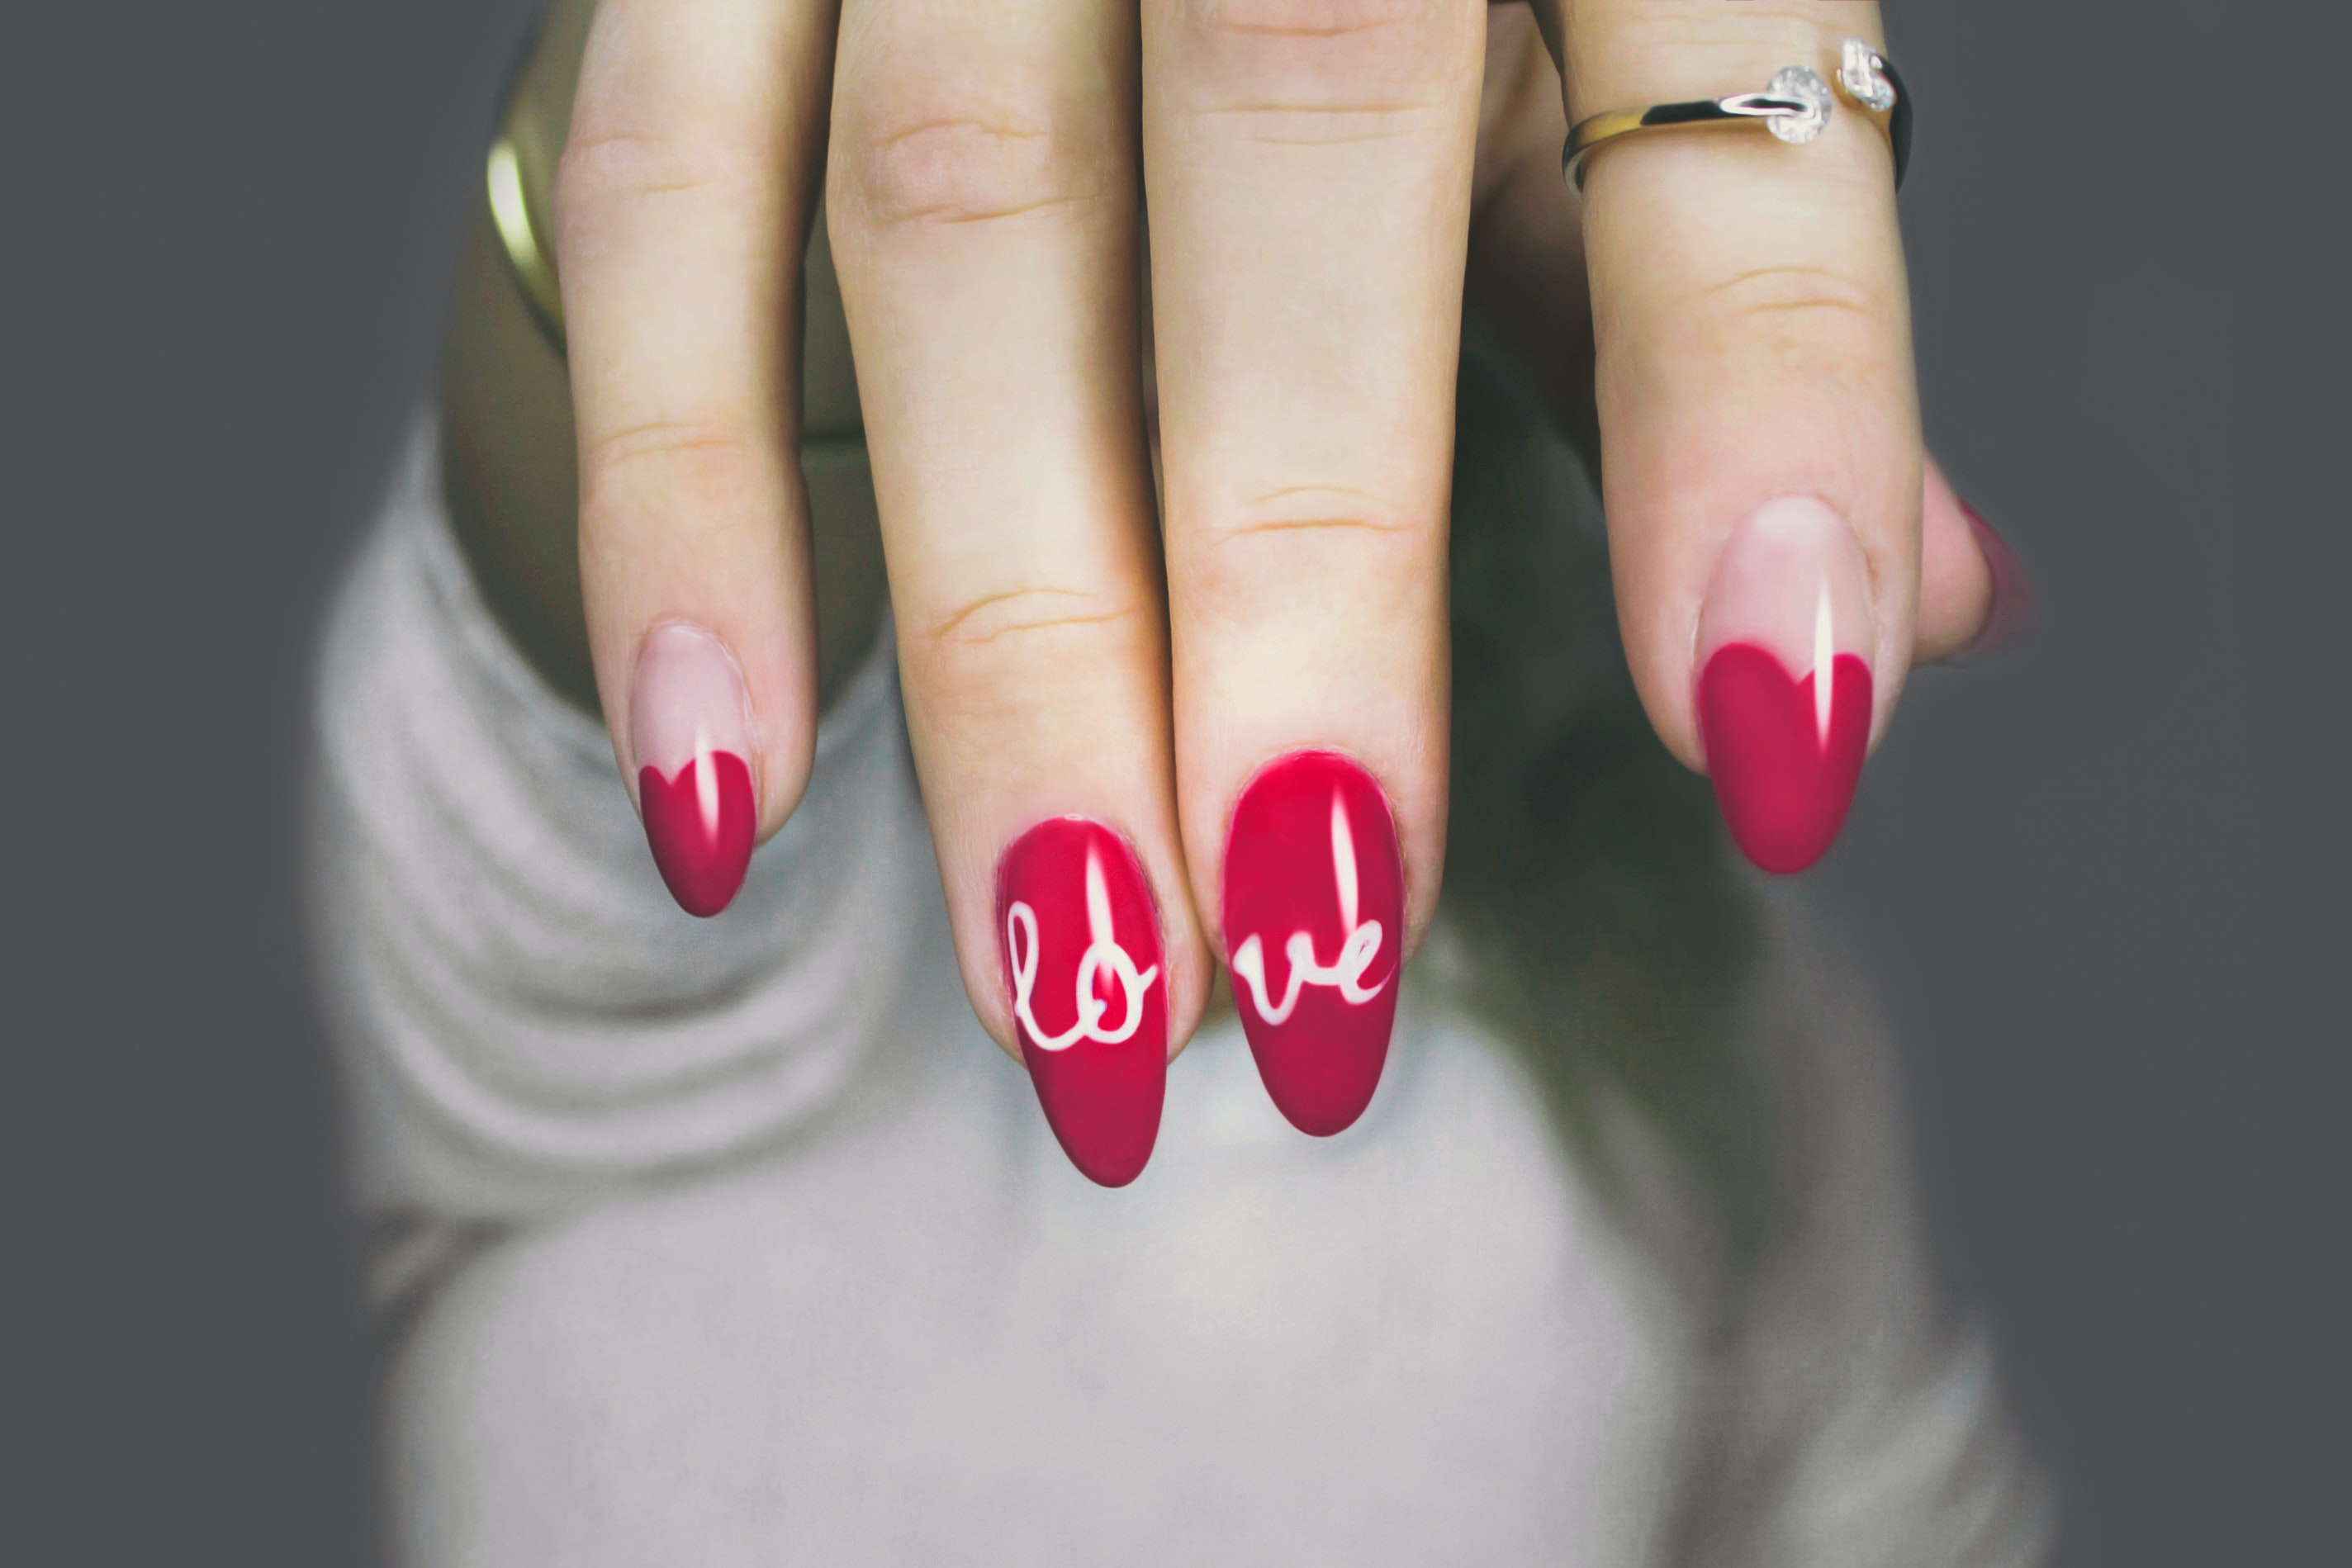 nail design that says love